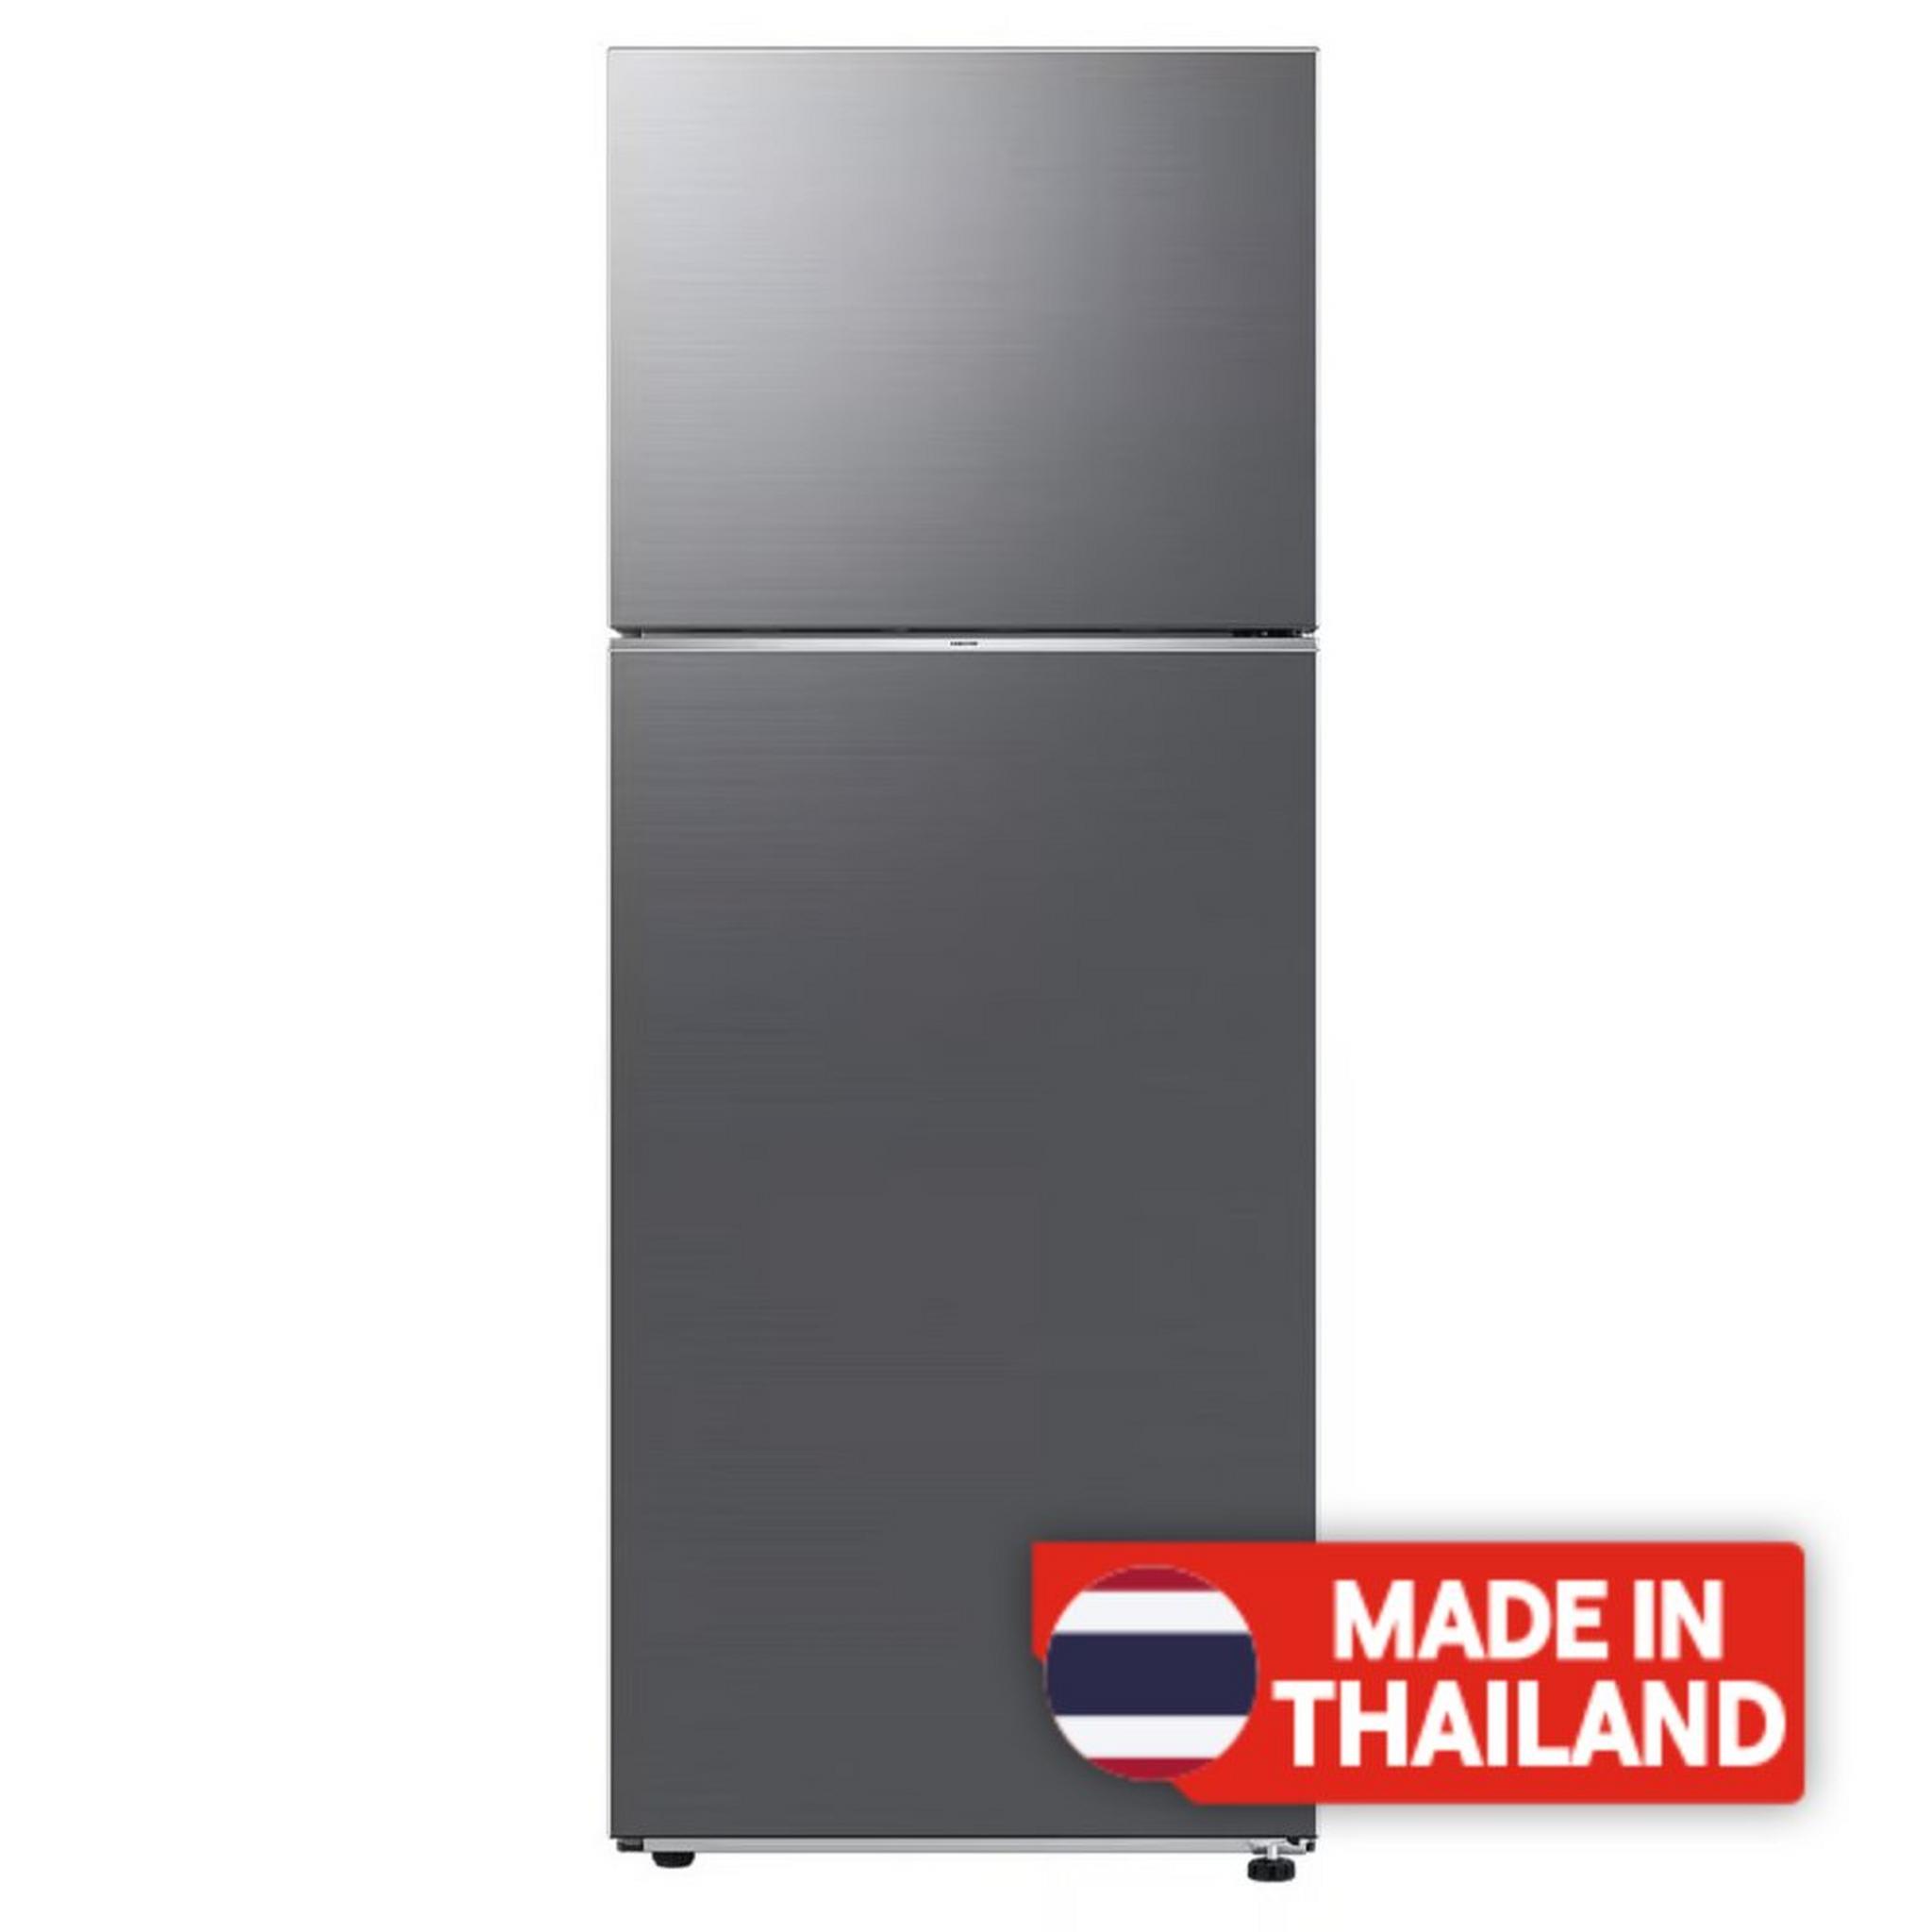 Samsung Top Freezer Refrigerator, 17.6CFT, 498-Liters, RT50CG6400S9 - Silver